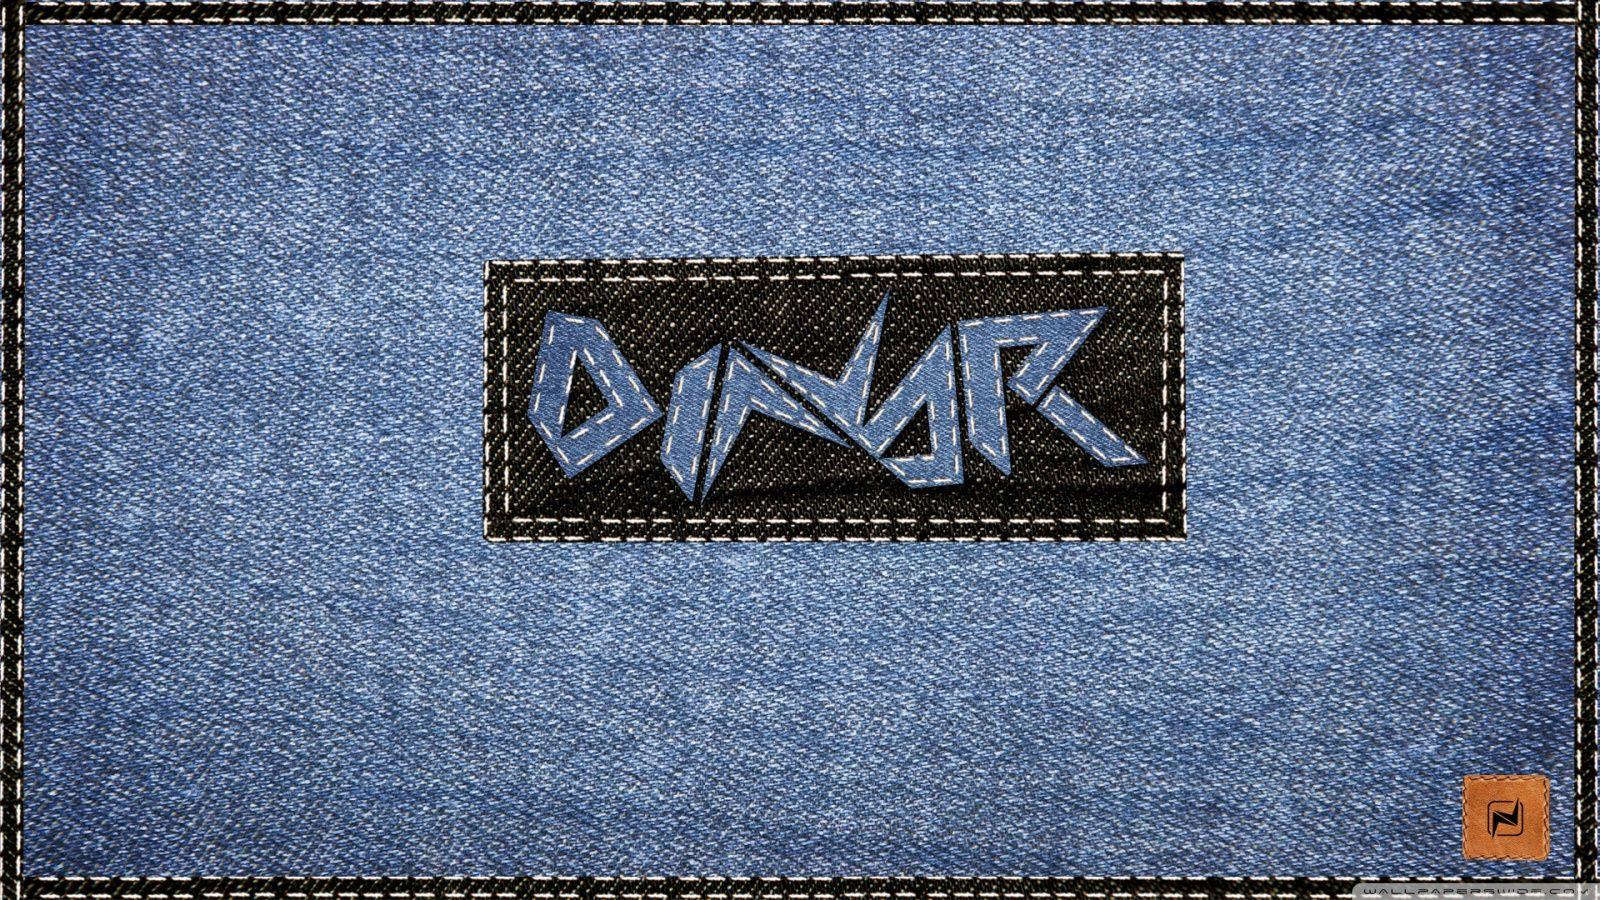 Dinar Jeans Clothing ❤ 4K HD Desktop Wallpaper for 4K Ultra HD TV